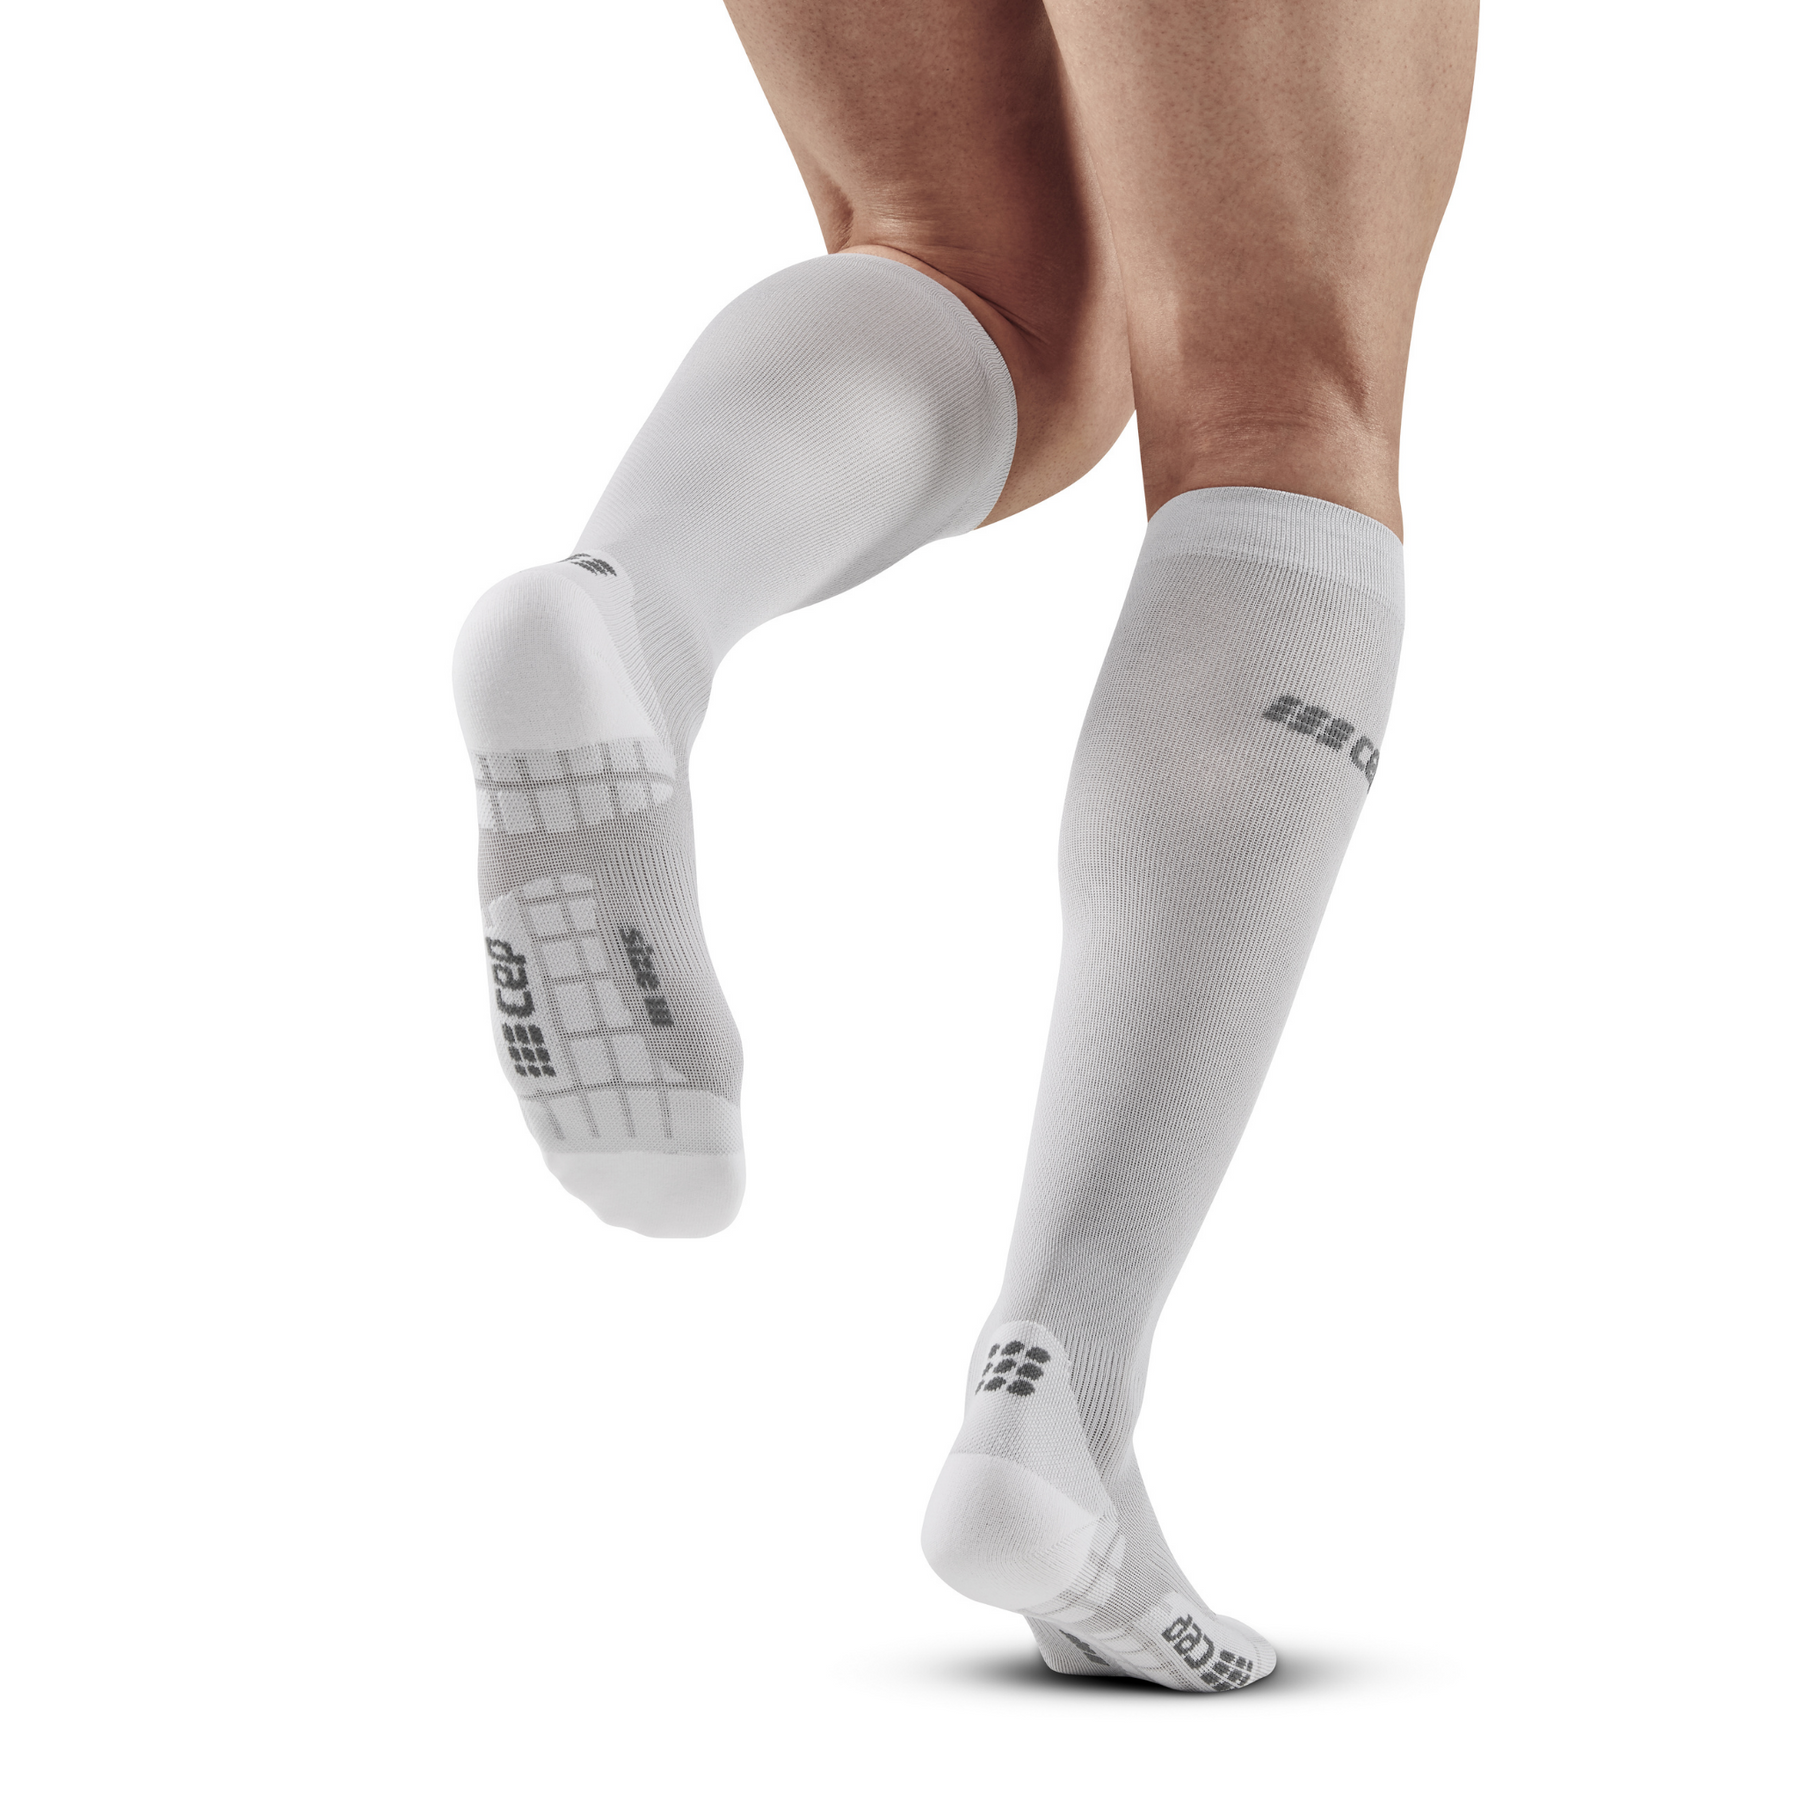 Socks CEP Ultralight Run   - Football boots & equipment